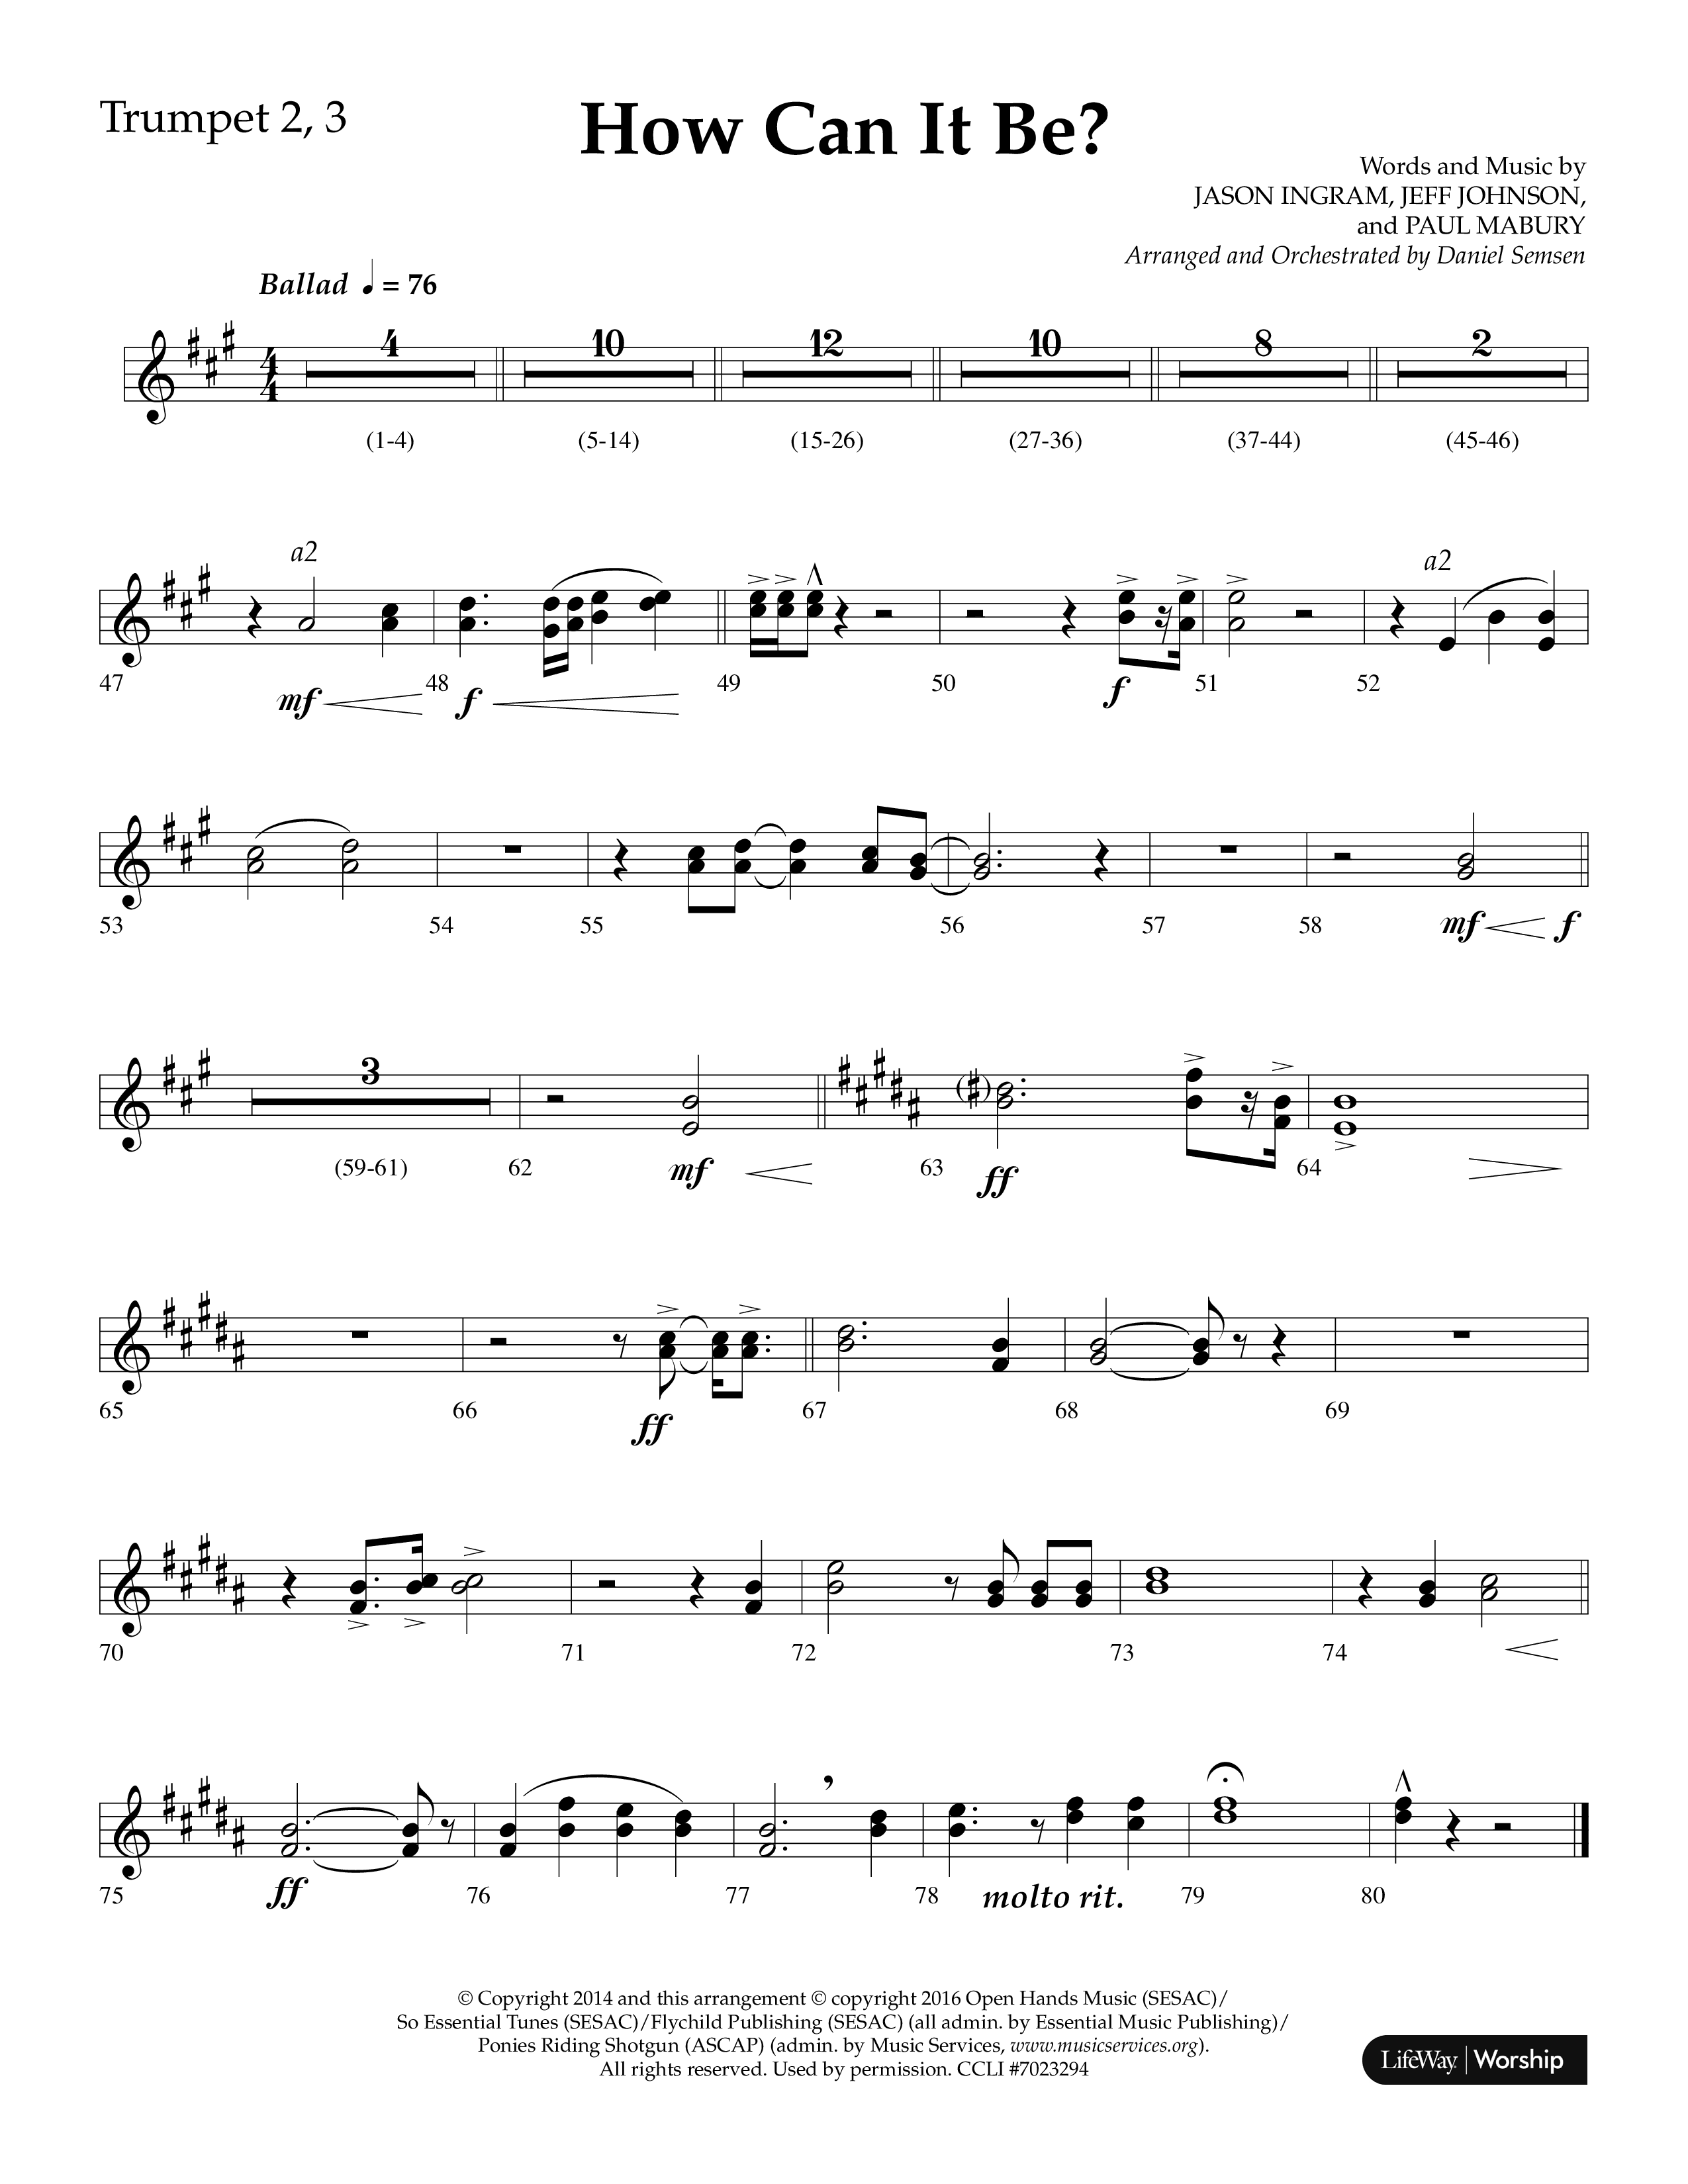 How Can It Be (Choral Anthem SATB) Trumpet 2/3 (Lifeway Choral / Arr. Daniel Semsen)